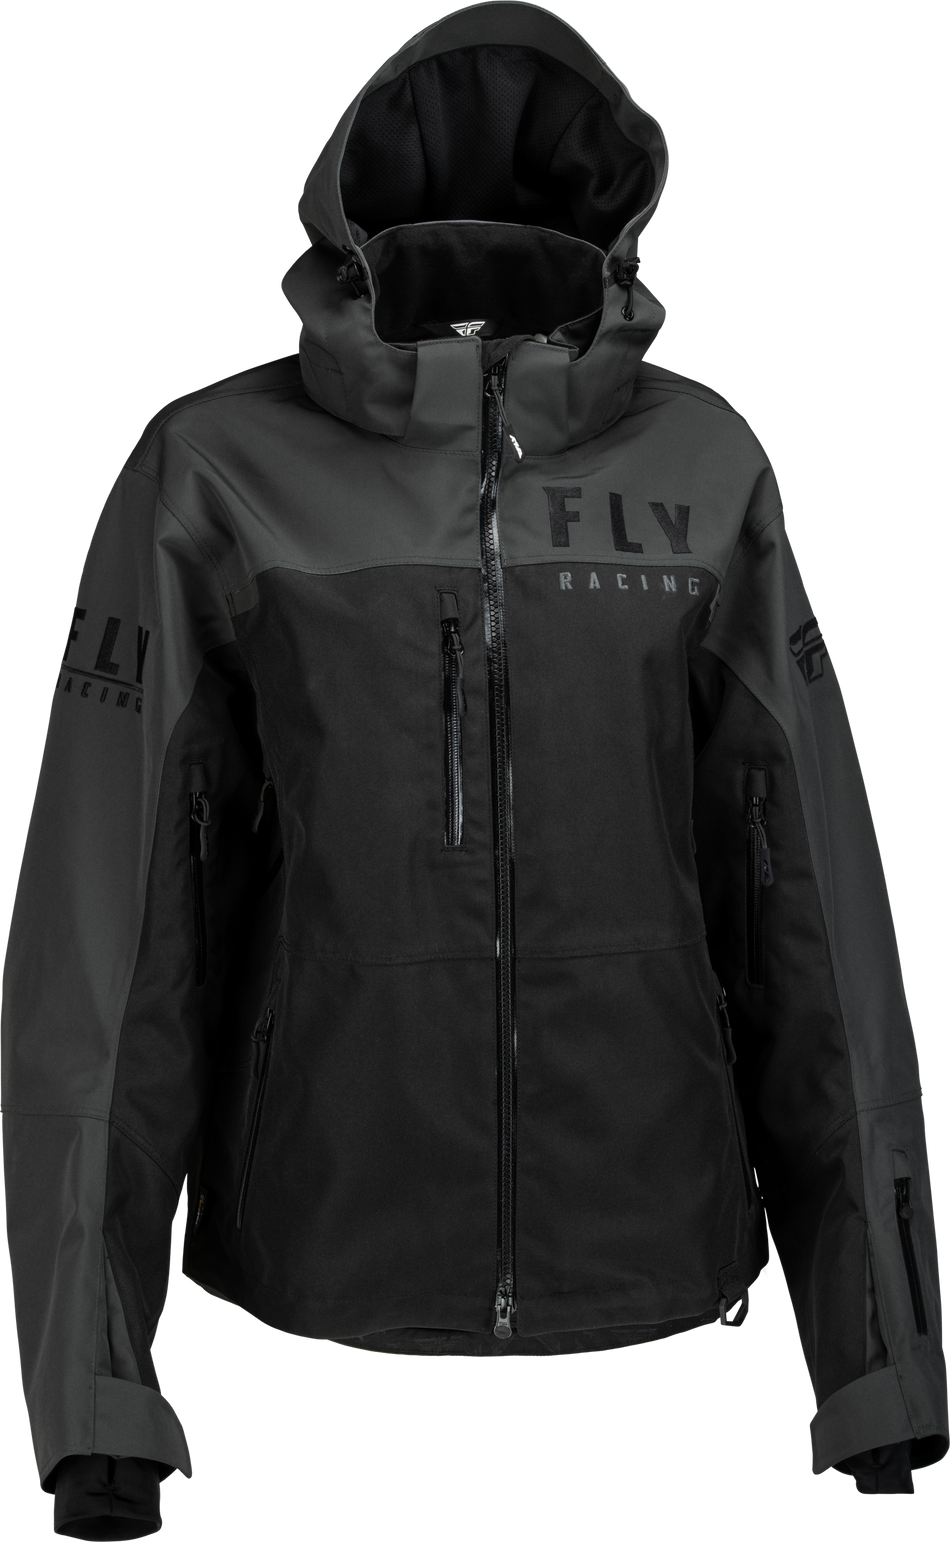 FLY RACING Women's Carbon Jacket Black/Grey 4x 470-45004X